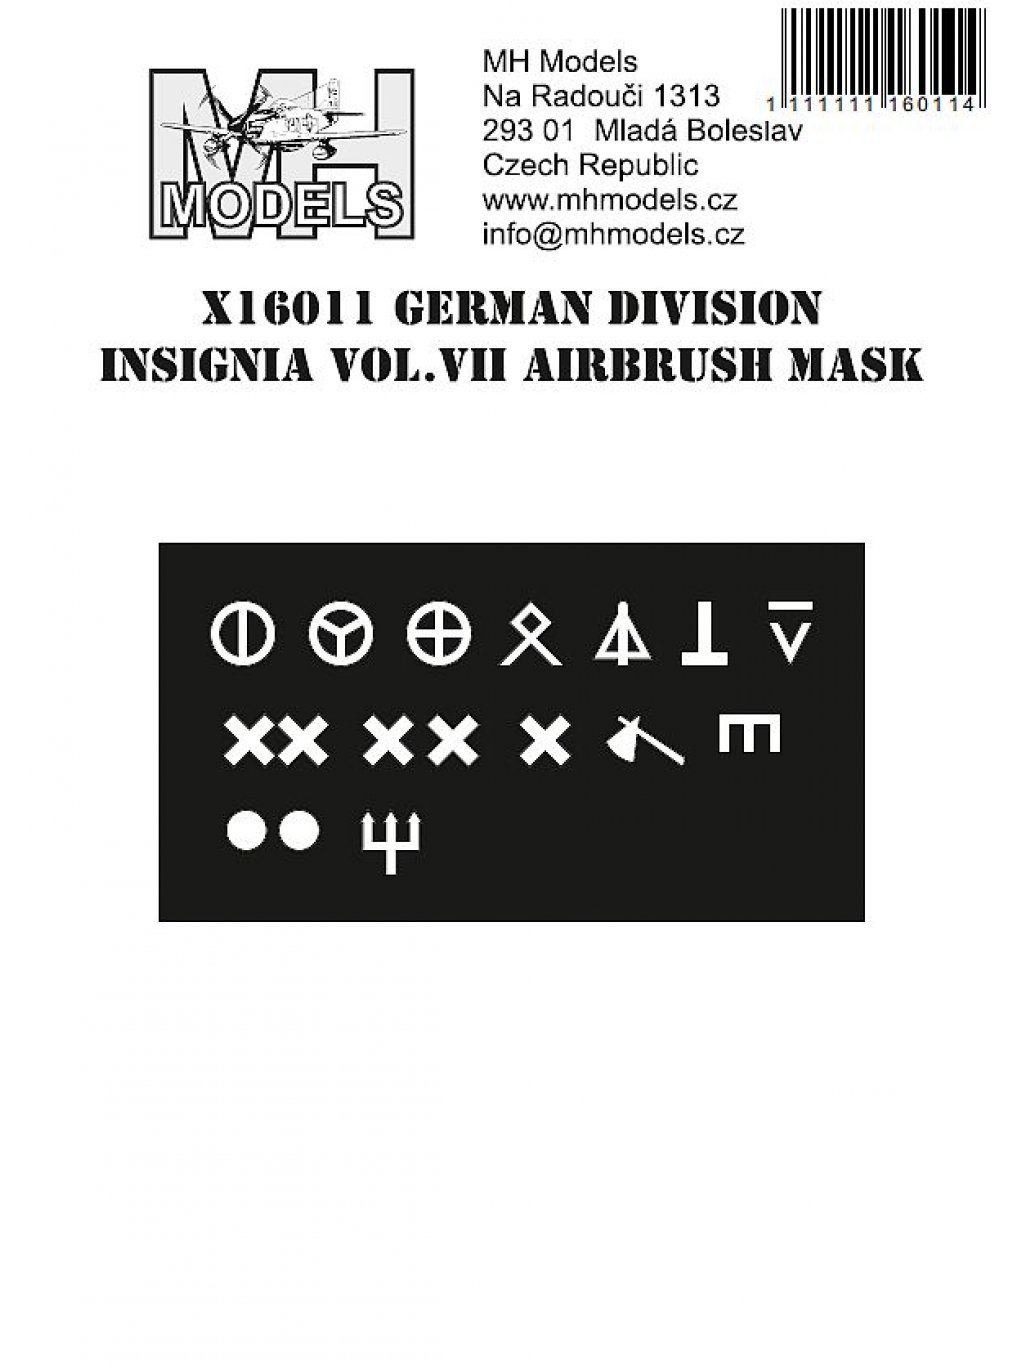 German division insignia vol.VII airbrush mask